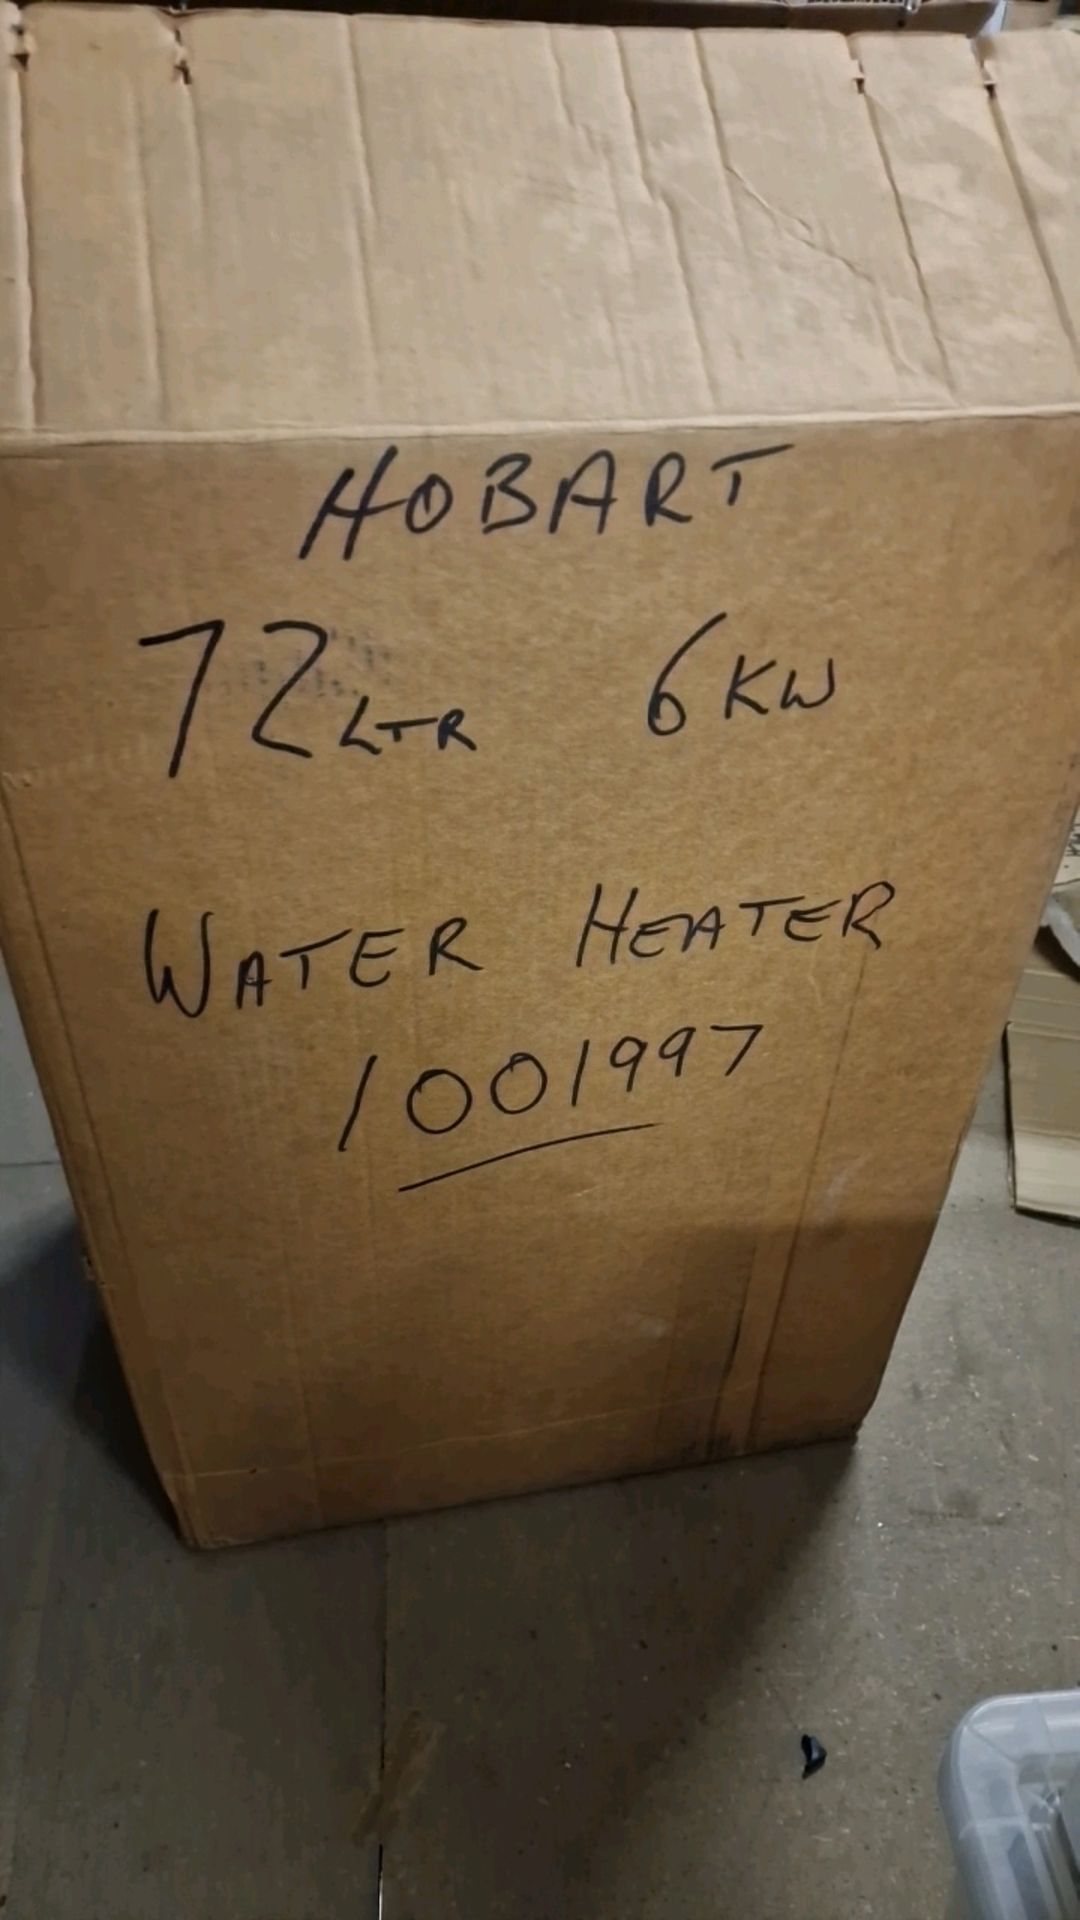 Hobart Hot Water Dispenser - Image 8 of 8